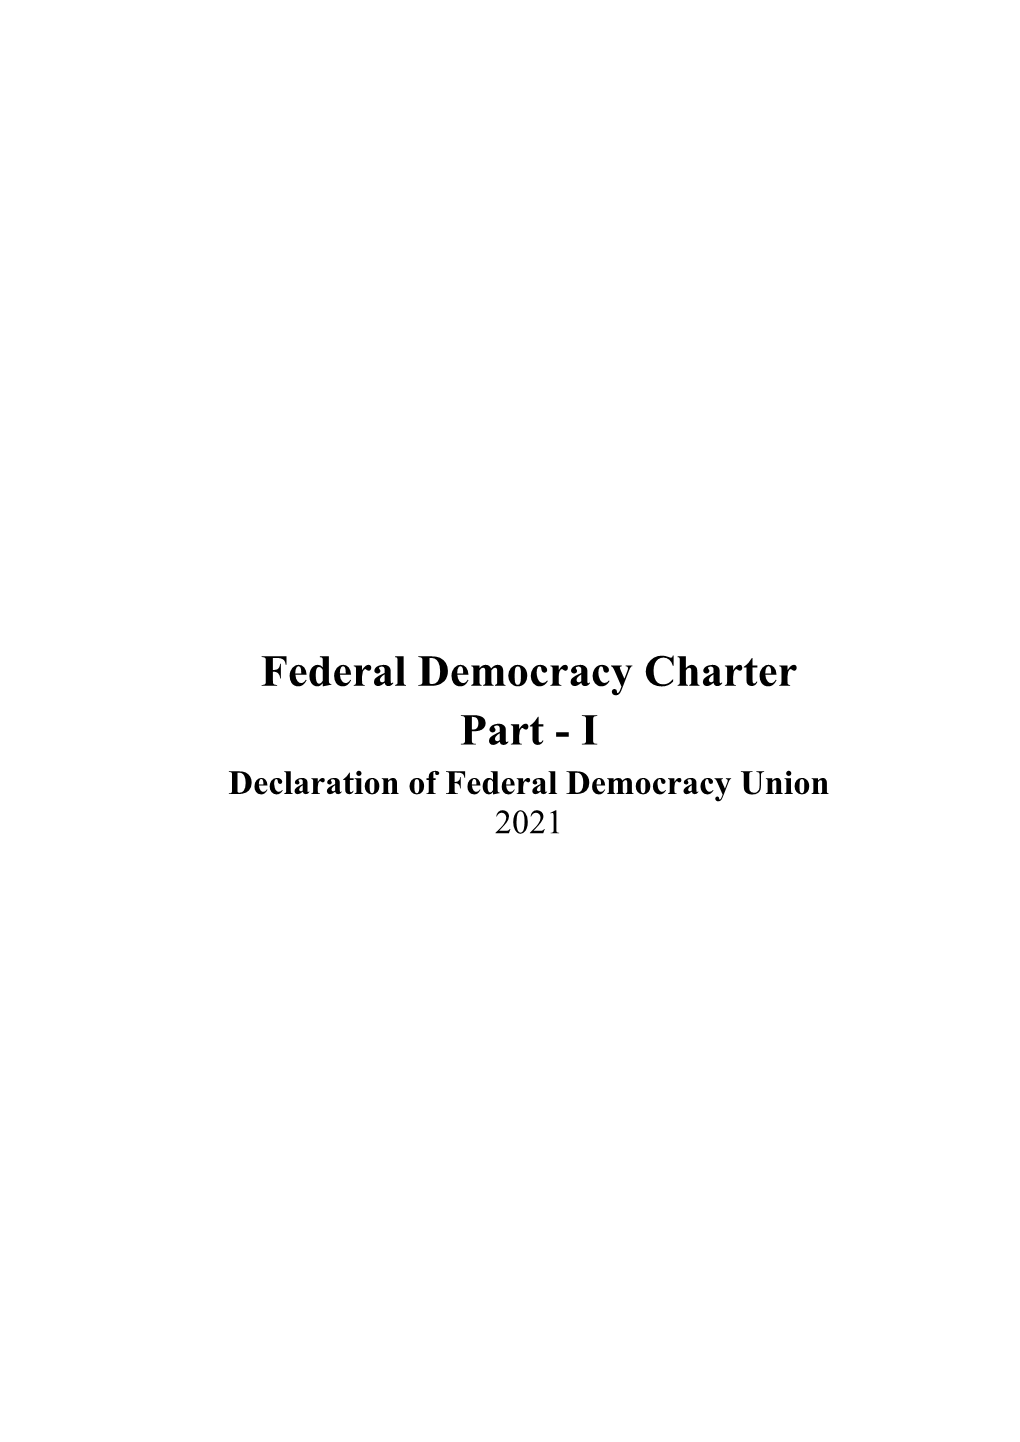 Federal Democracy Charter Part - I Declaration of Federal Democracy Union 2021